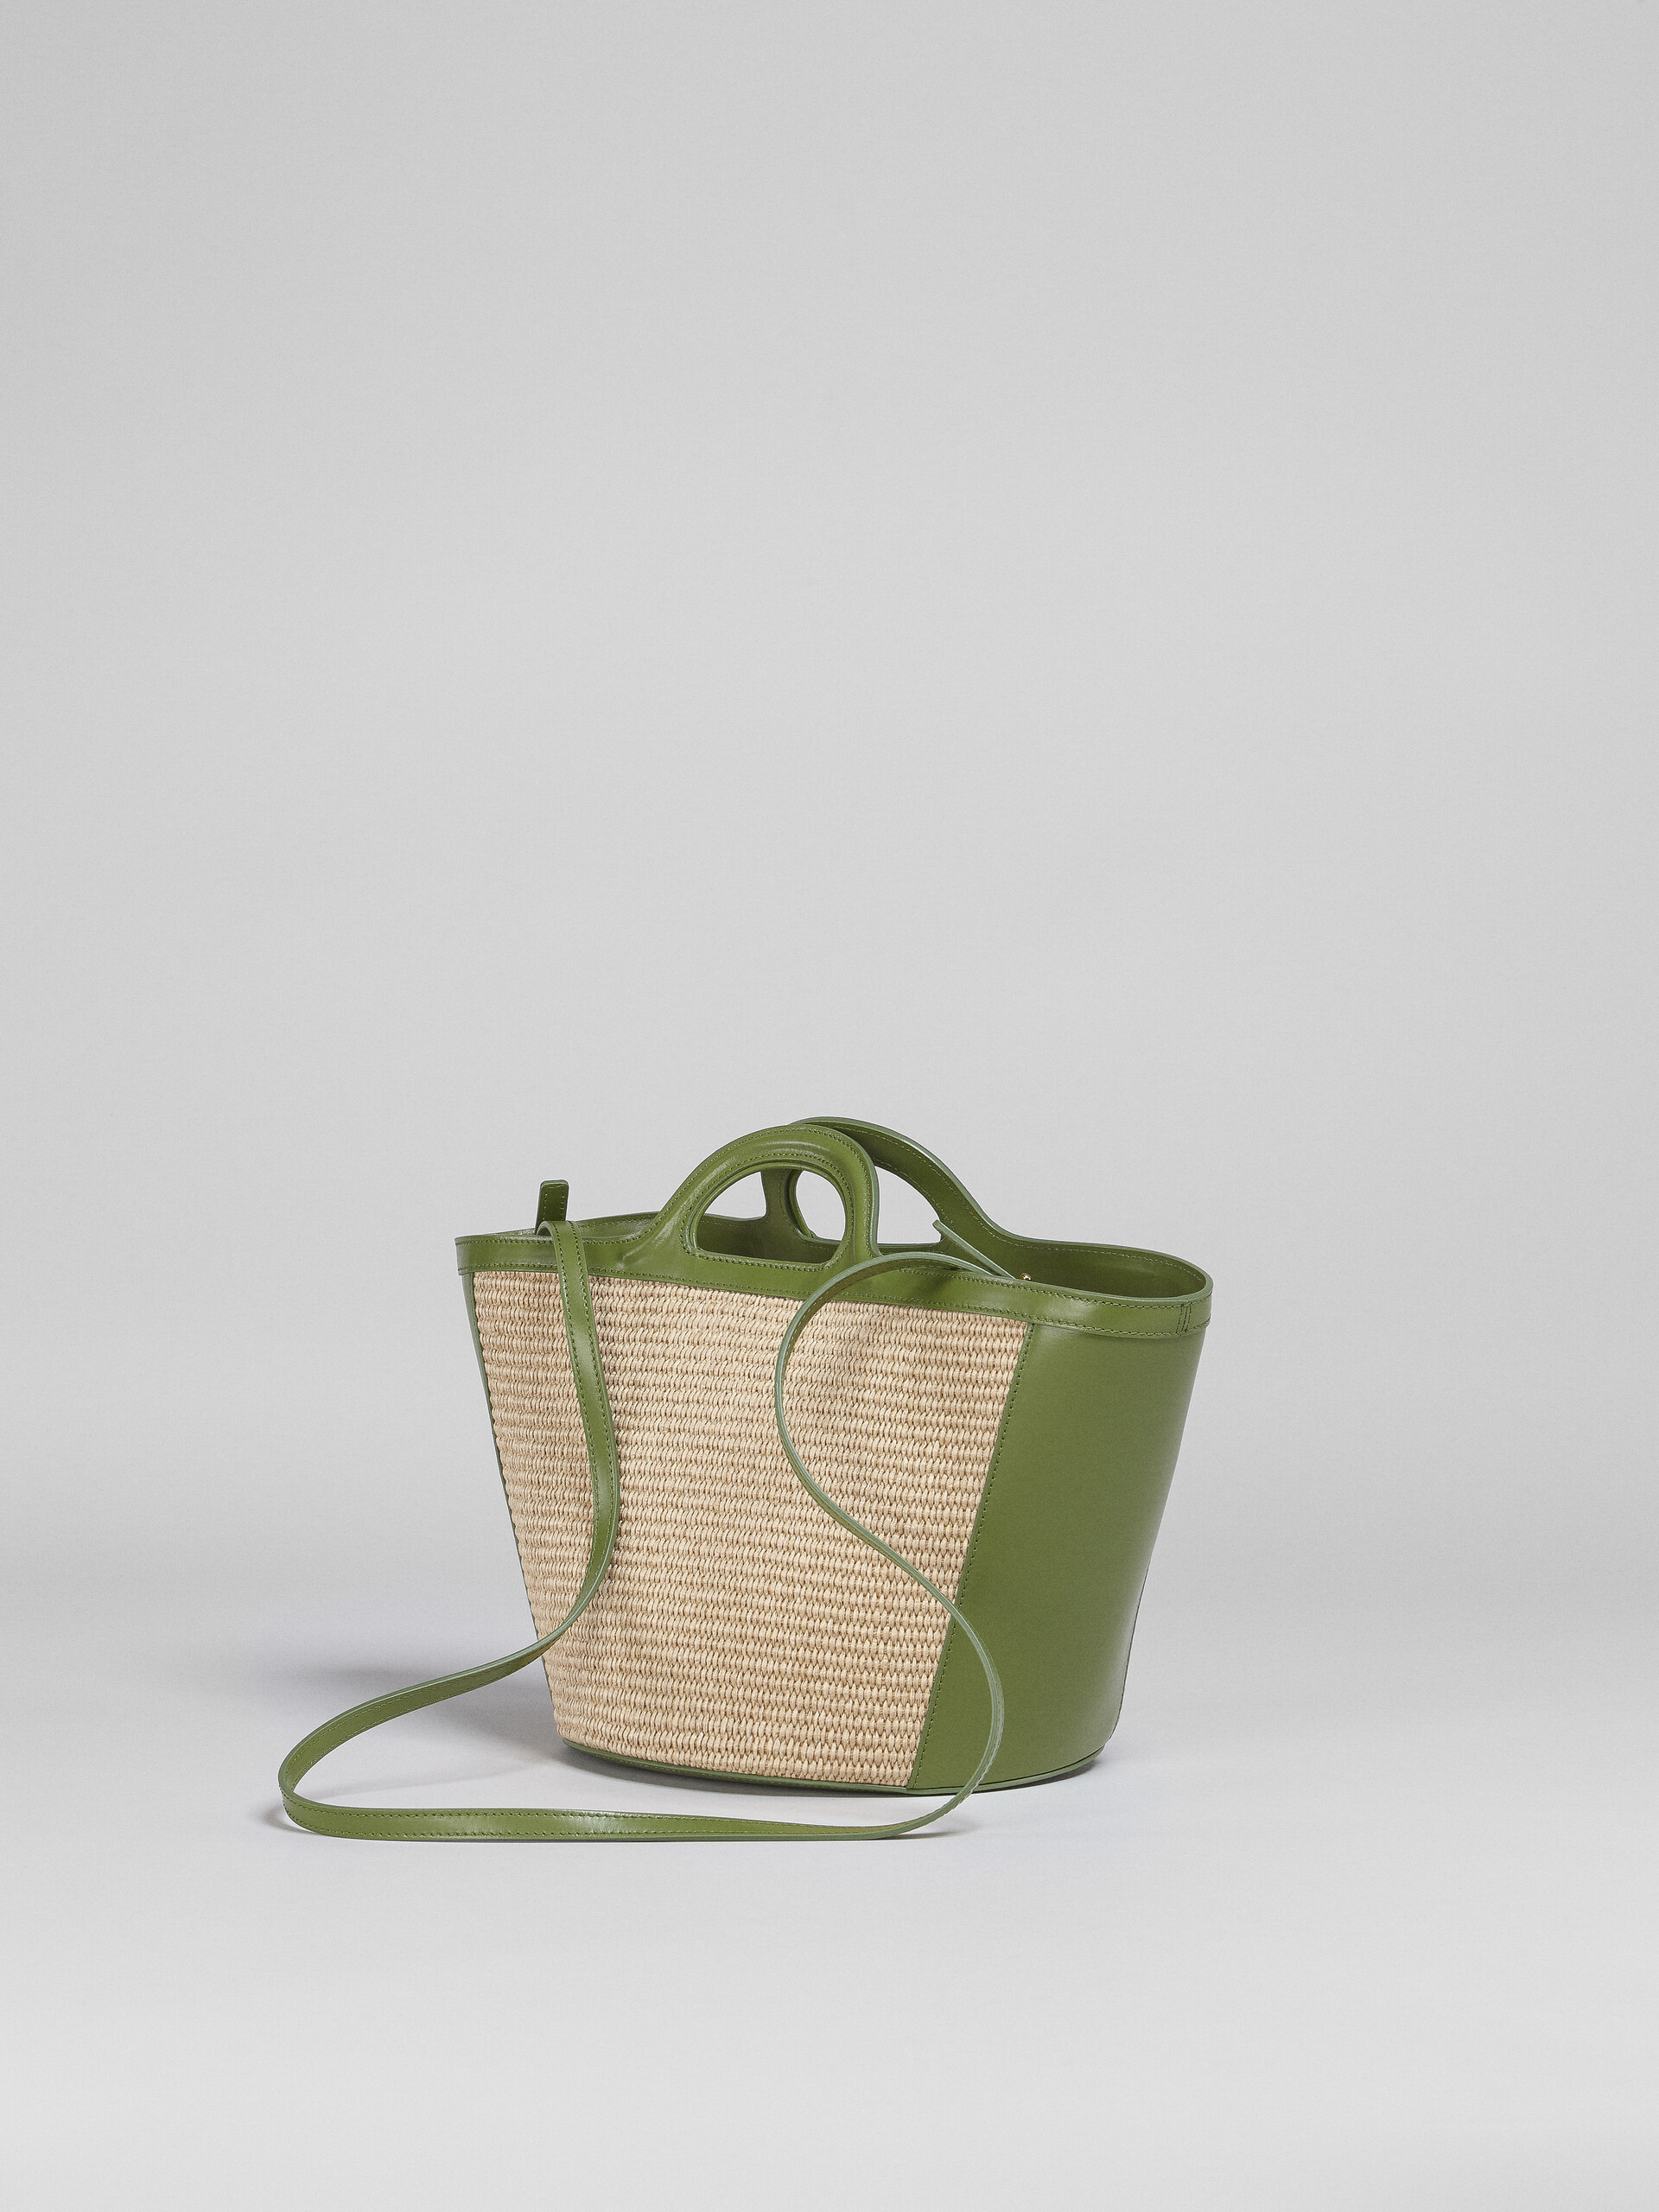 TROPICALIA small bag in green leather and raffia - Handbags - Image 3